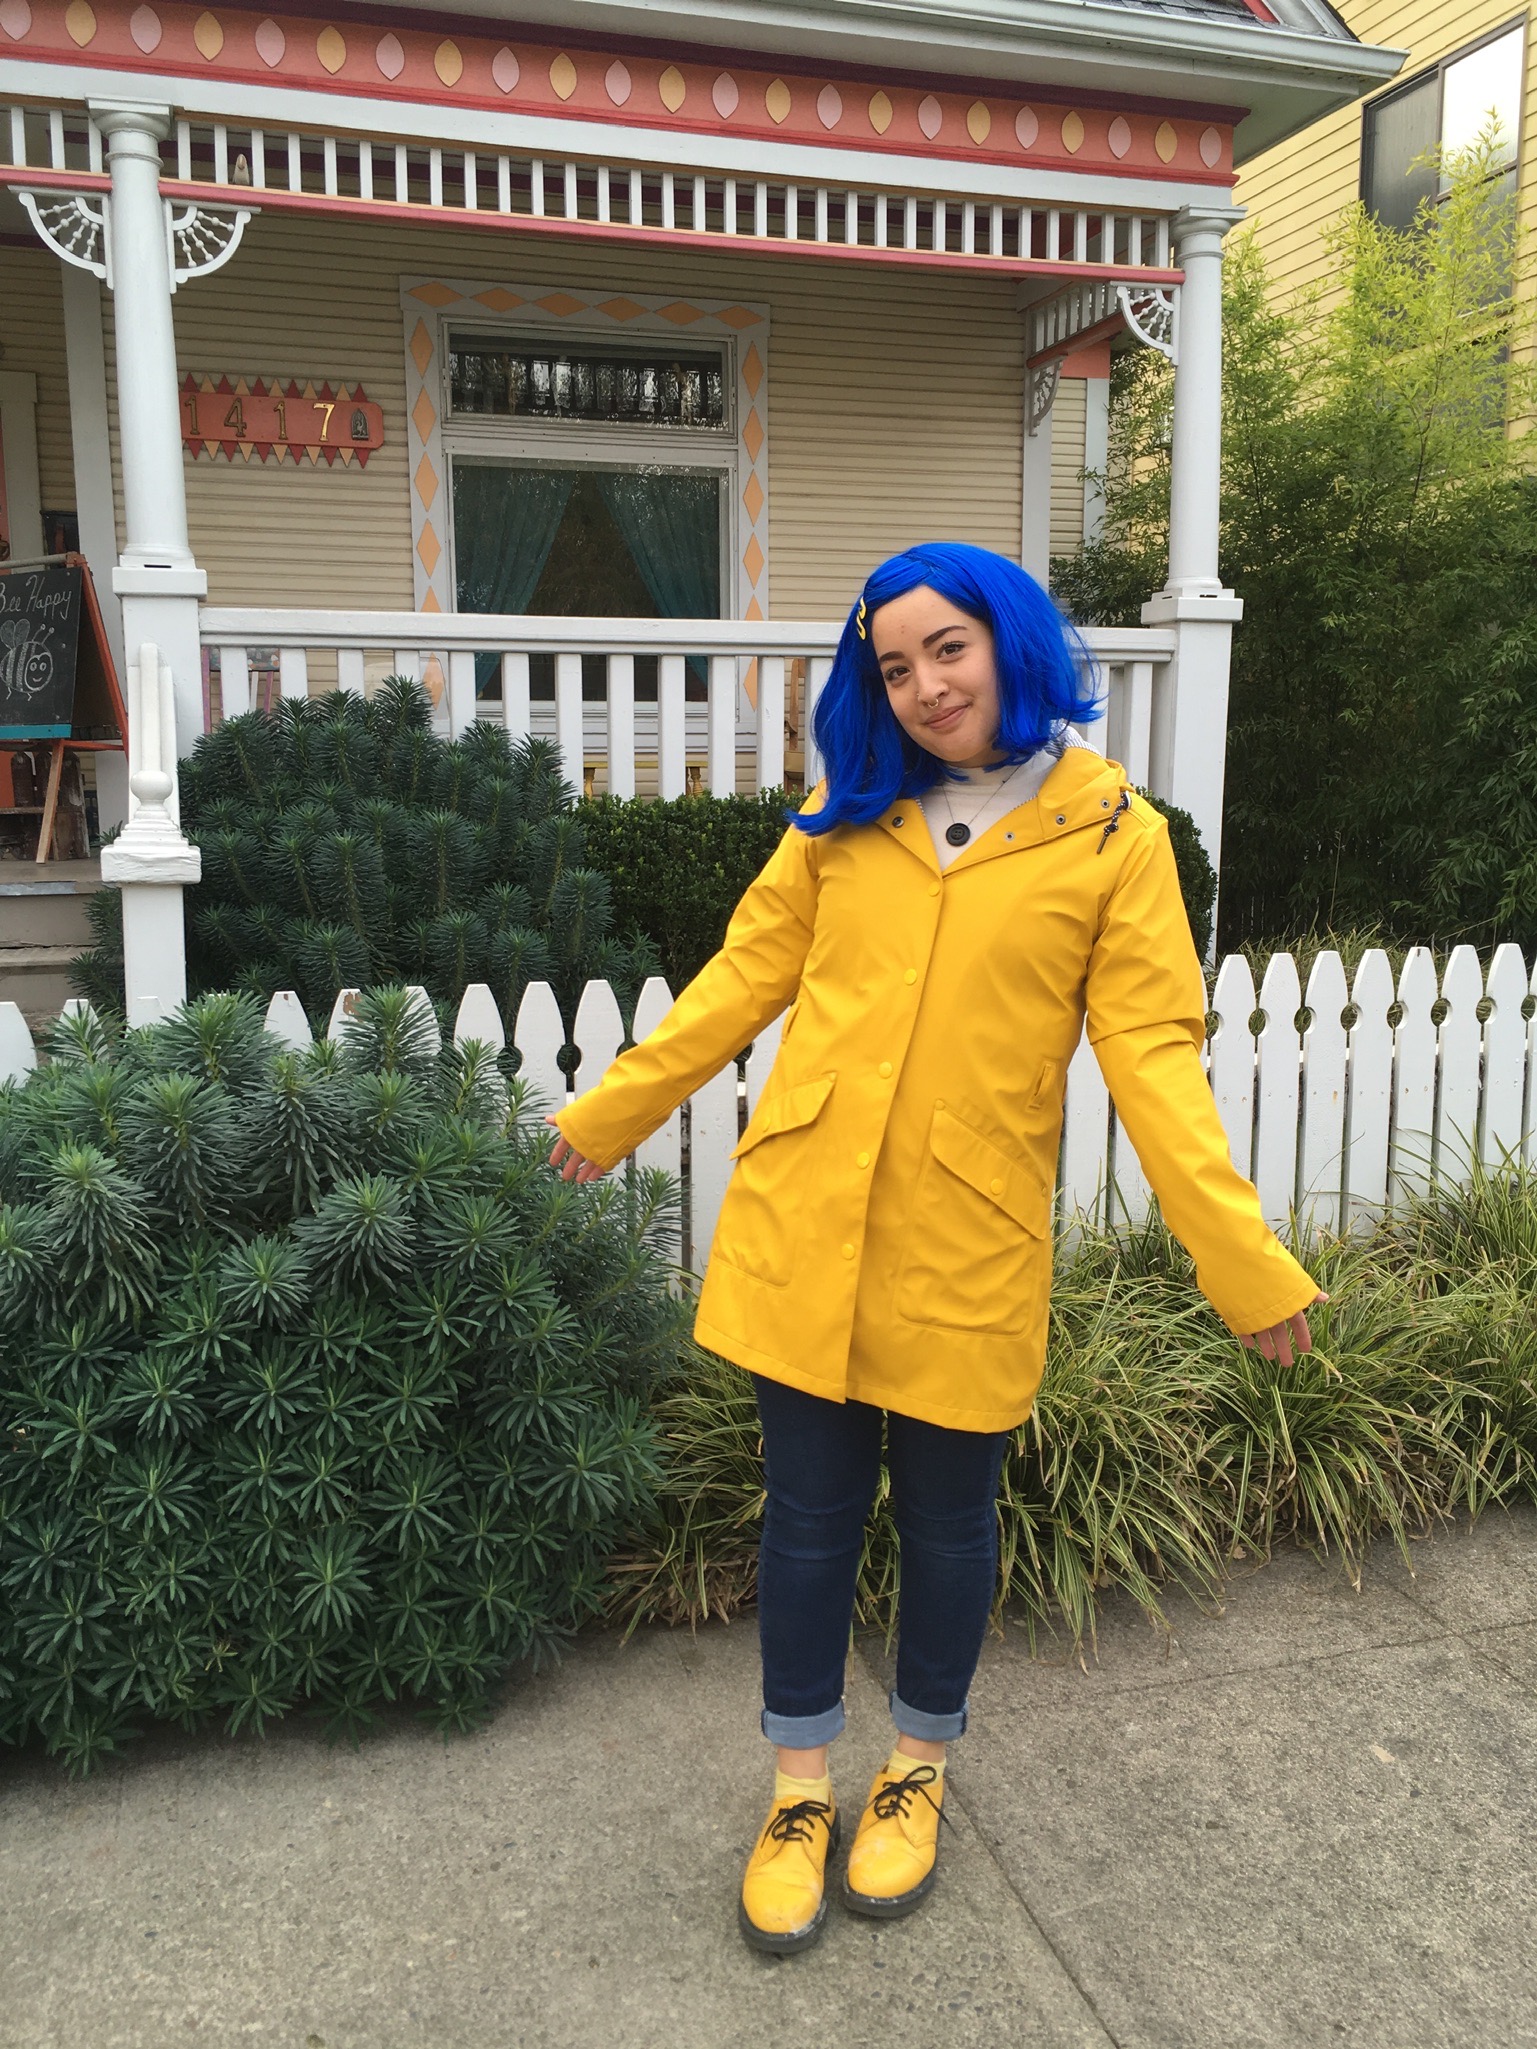 Coraline Book Character Halloween Costume, Yellow Rain Jacket and Blue Wig